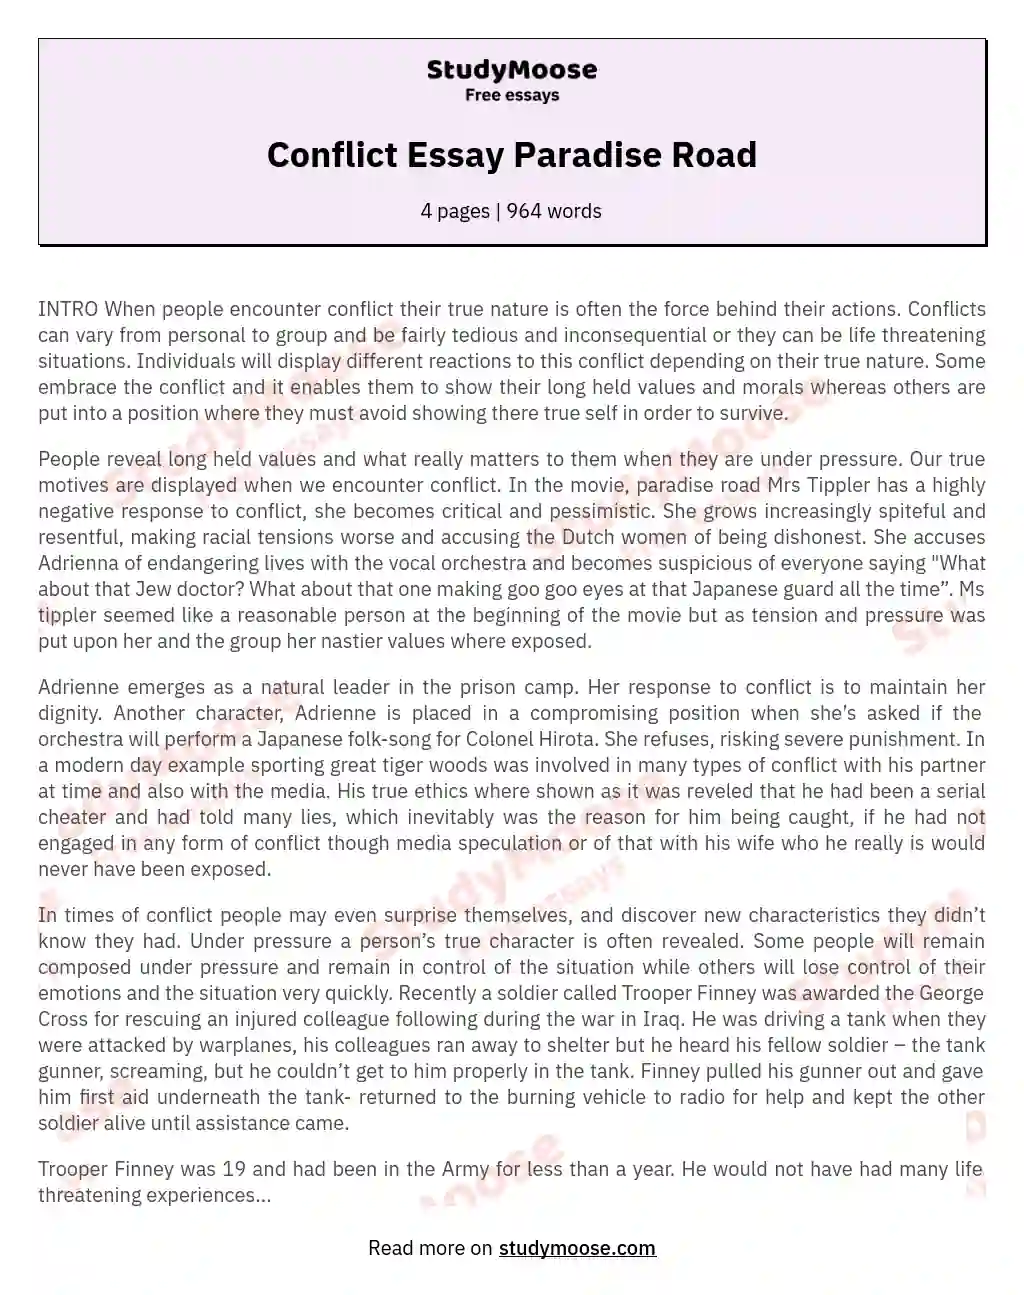 Conflict Essay Paradise Road essay